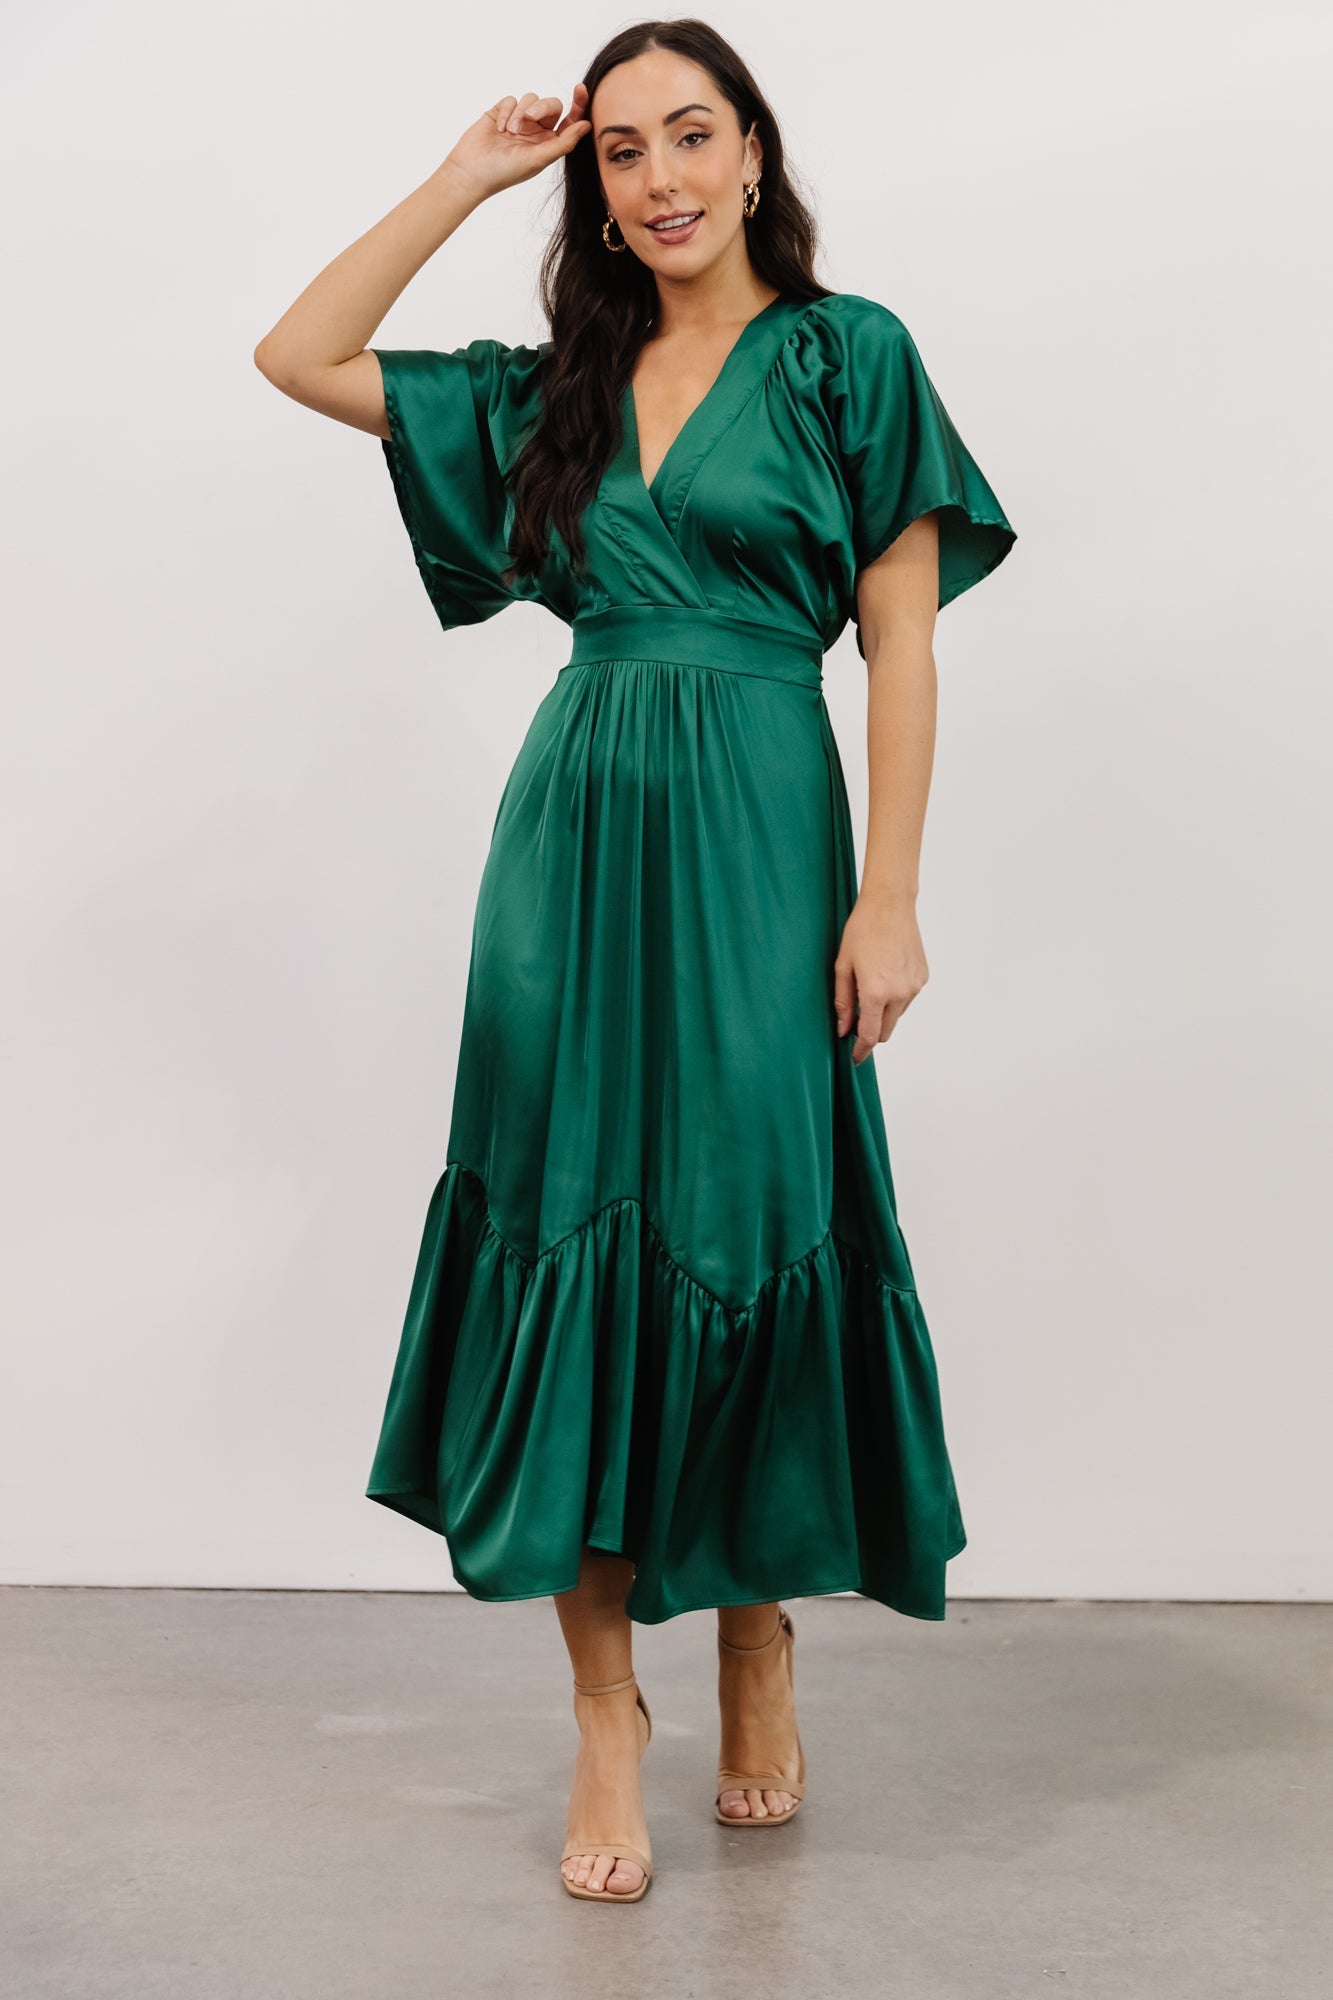 Green Satin Dress